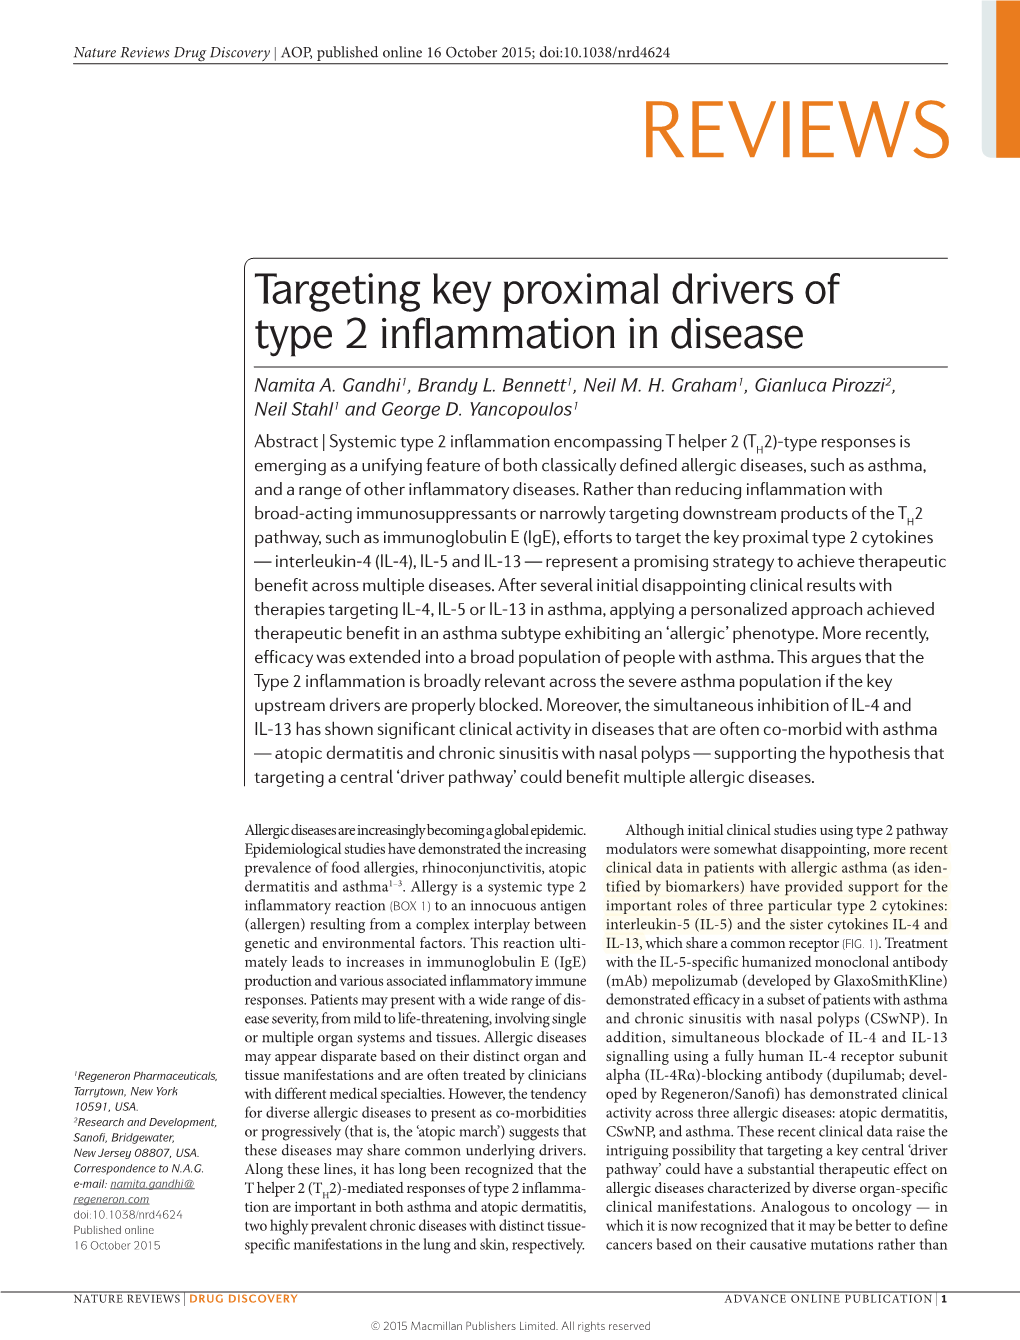 Targeting Key Proximal Drivers of Type 2 Inflammation in Disease